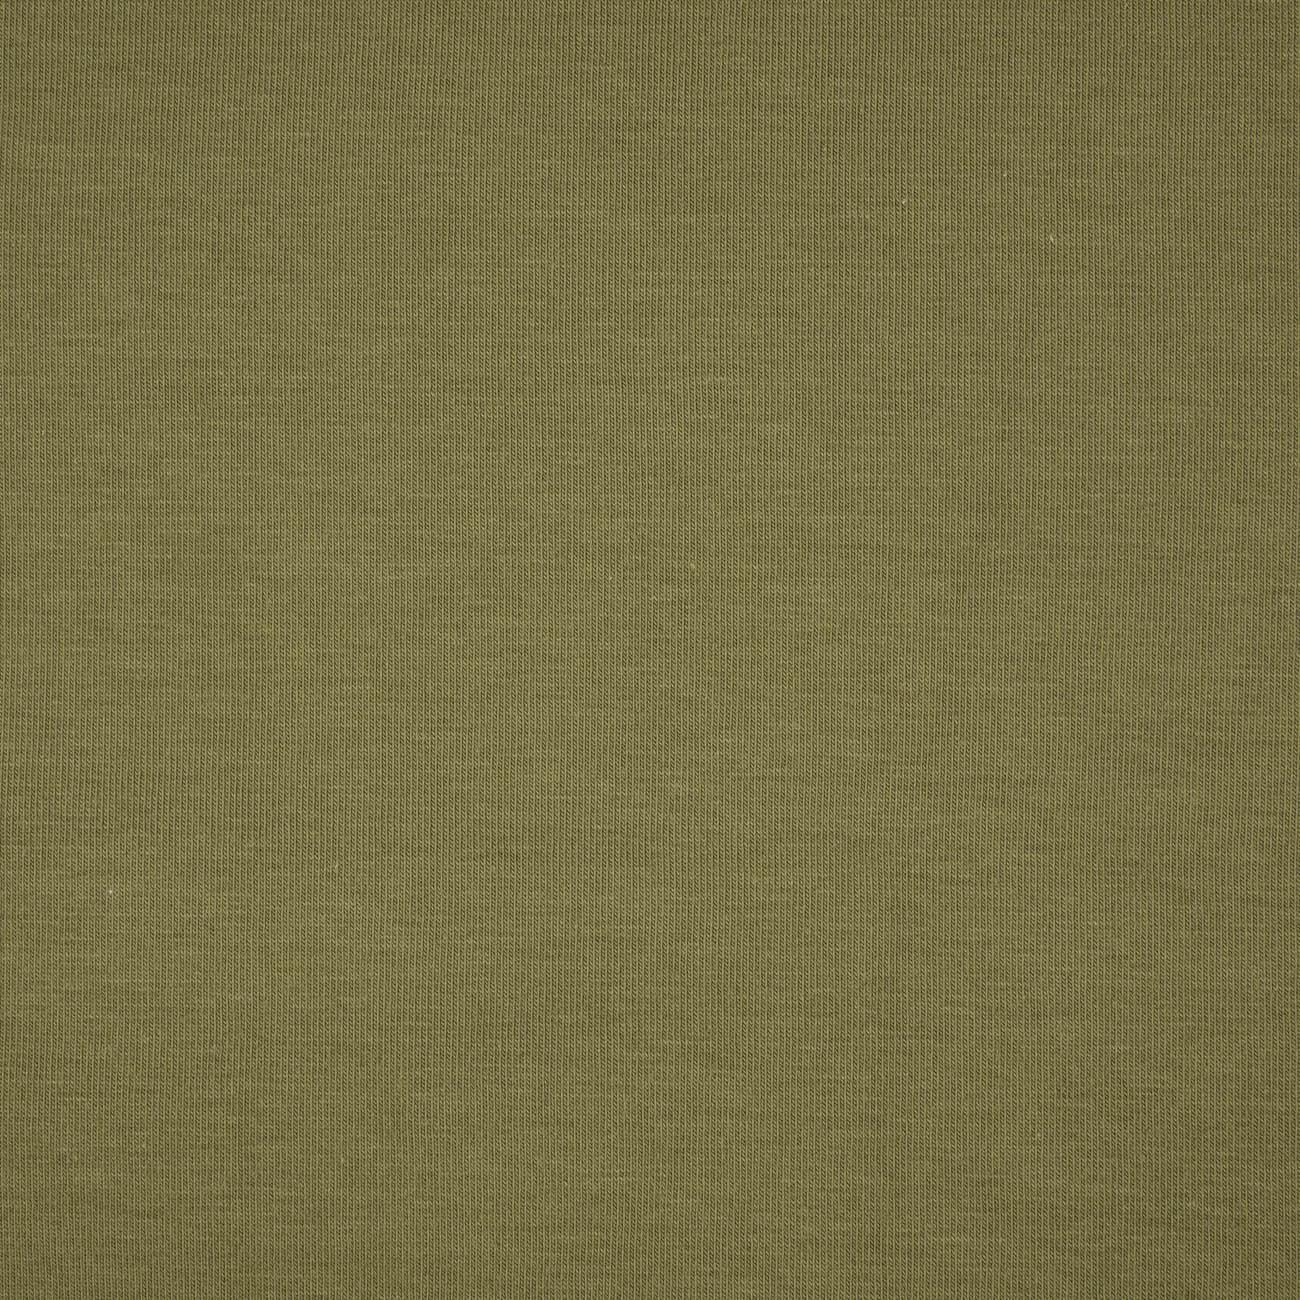 D-13 OLIVE GREEN - t-shirt with elastan TE210